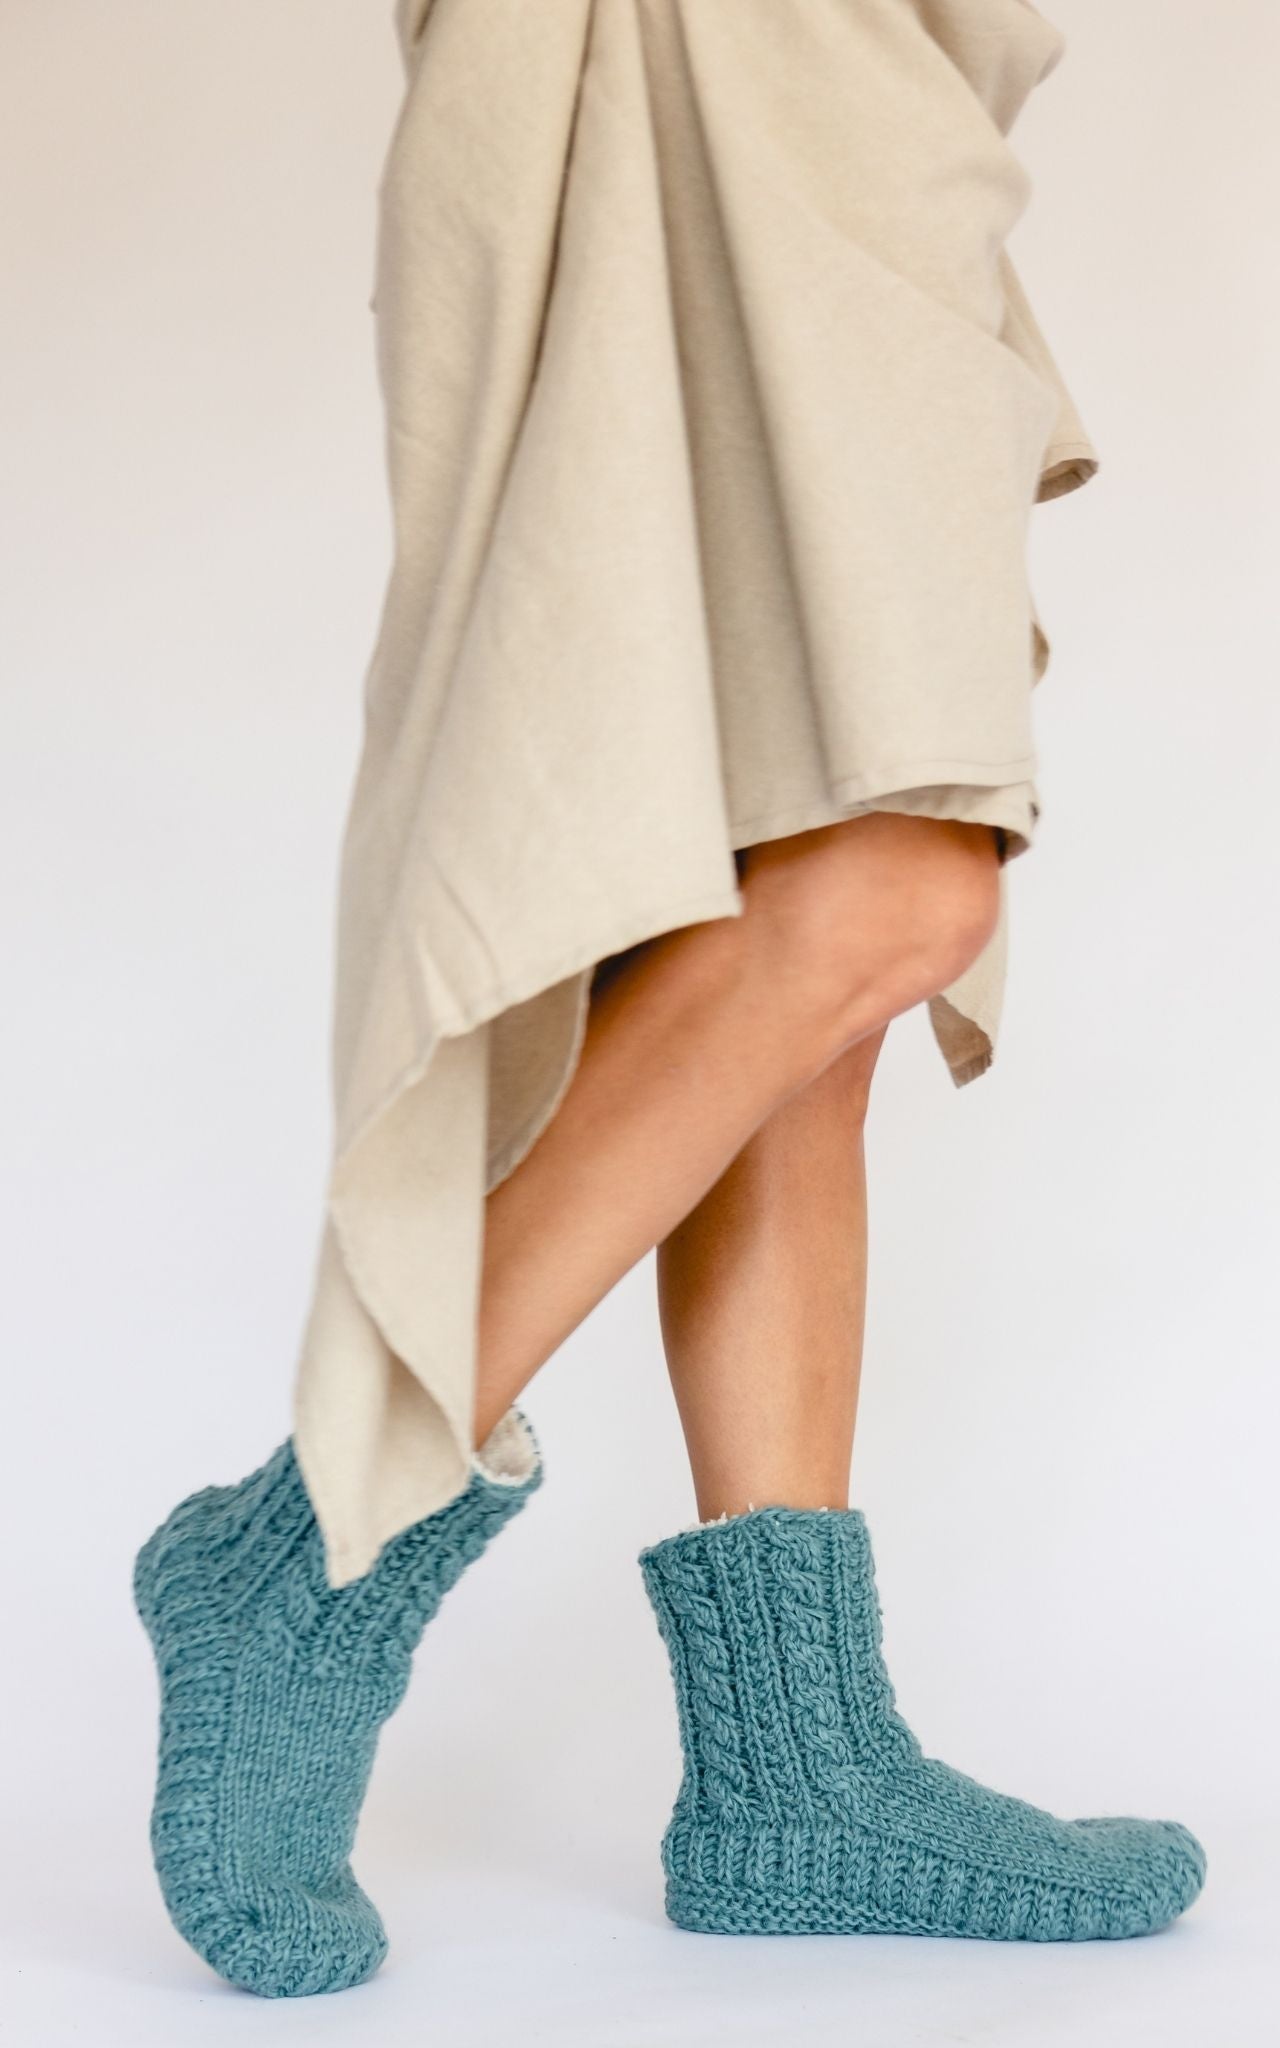 Surya Australia Ethical Wool Socks made in Nepal - Light Blue